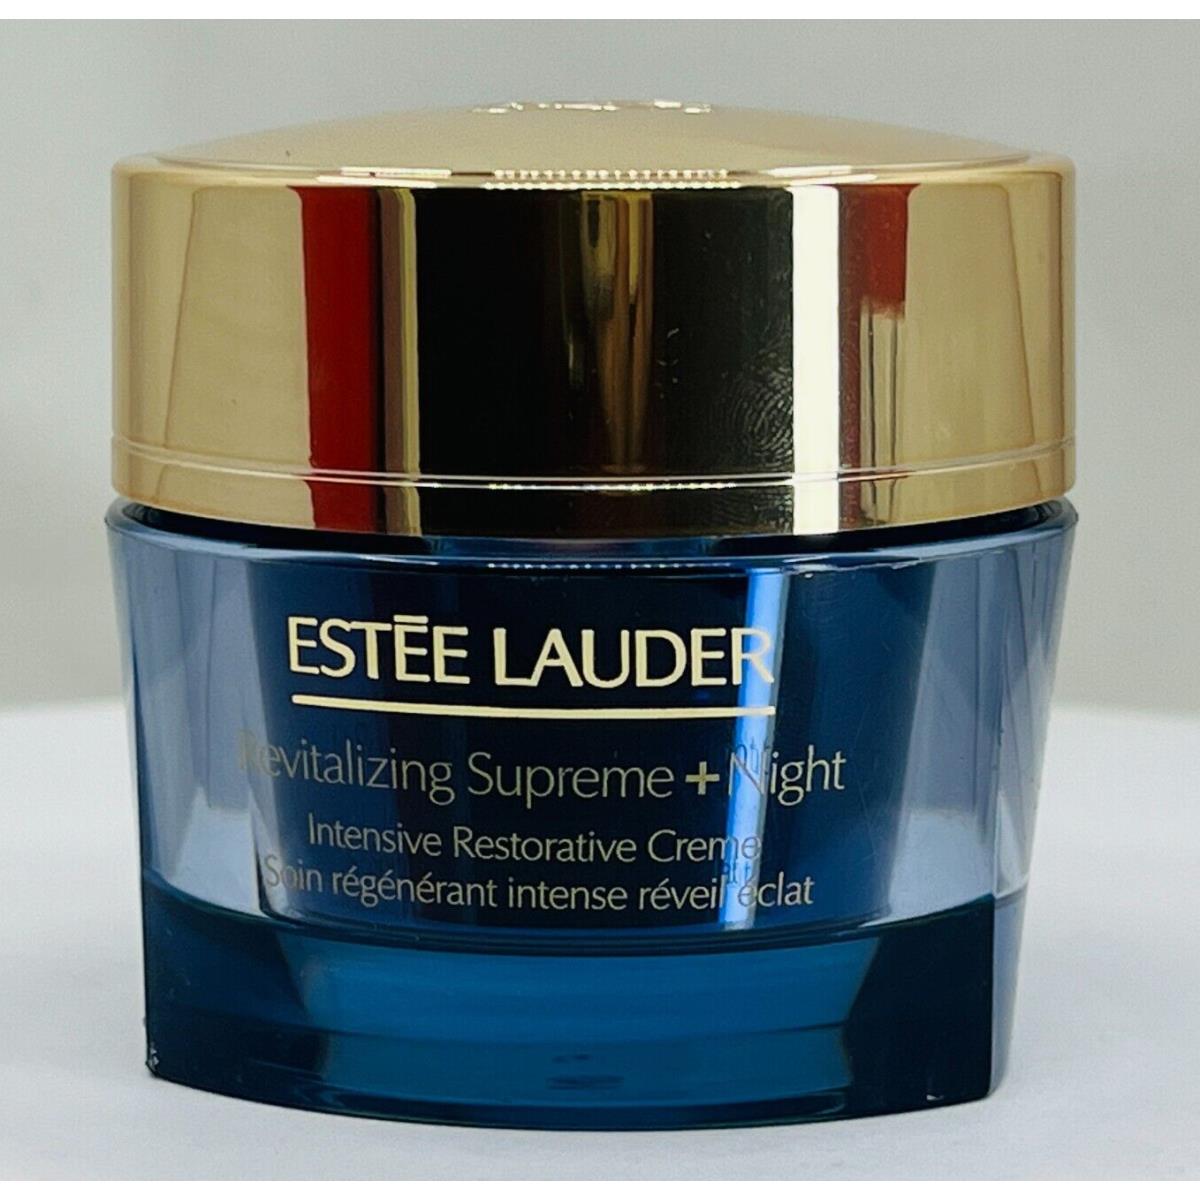 Estee Lauder Revitalizing Supreme+night Intensive Restorative Creme-1.7 oz